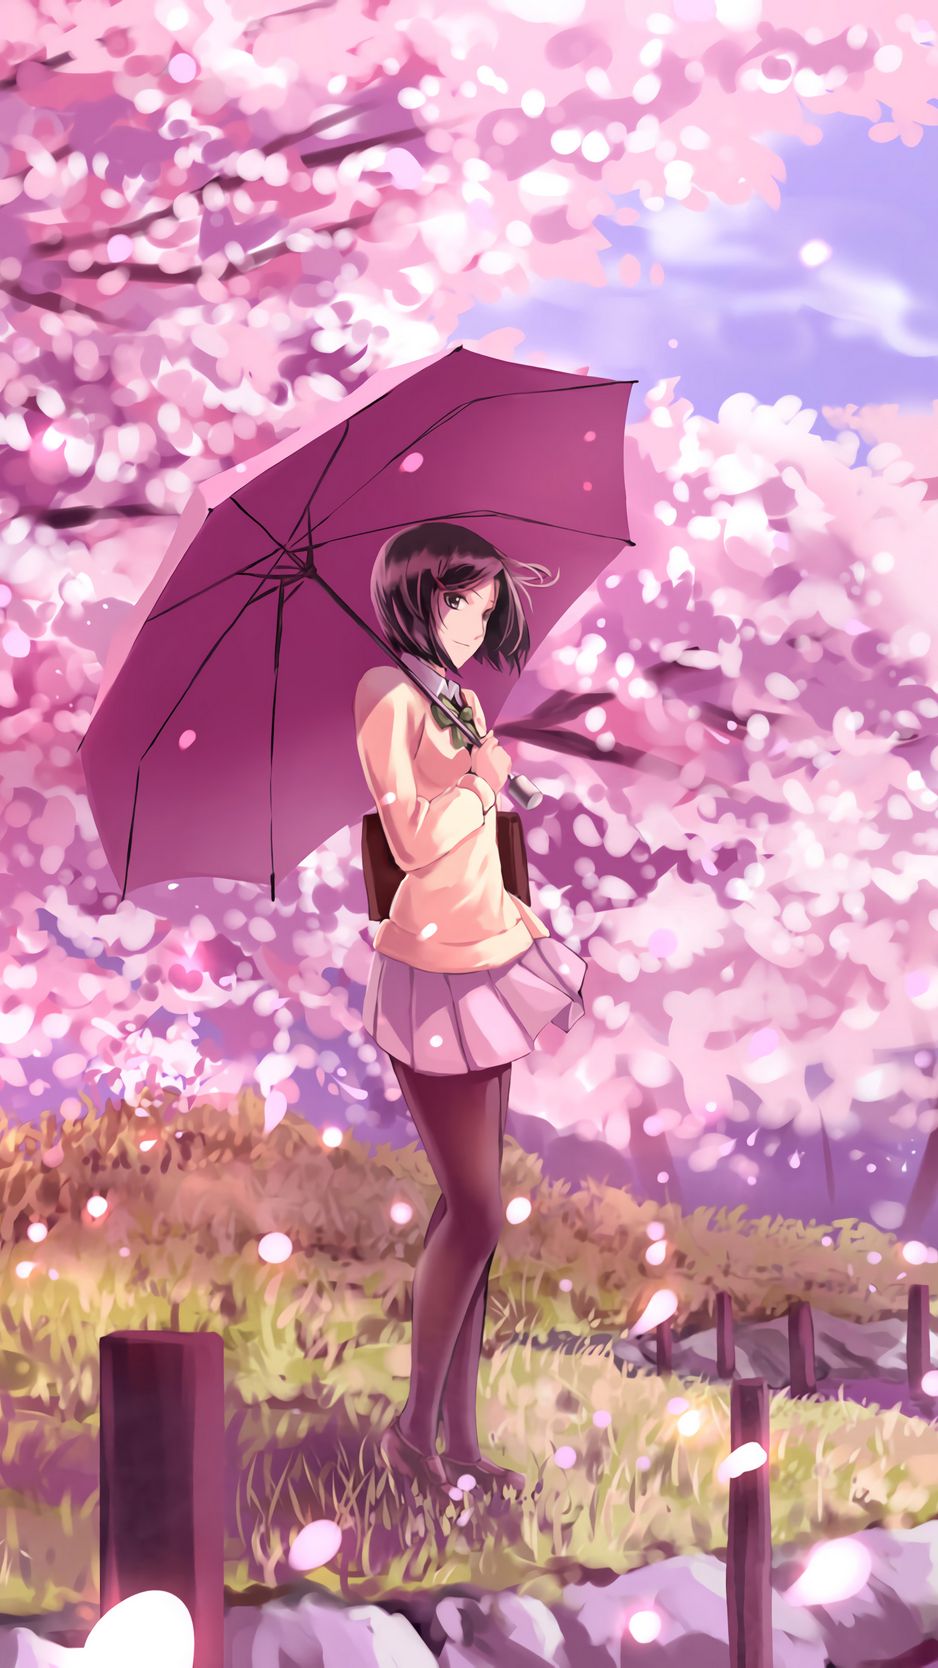 Anime Background Sakura Petaled Landscape with Sky Stock Illustration   Illustration of watercolor fantasy 279997067